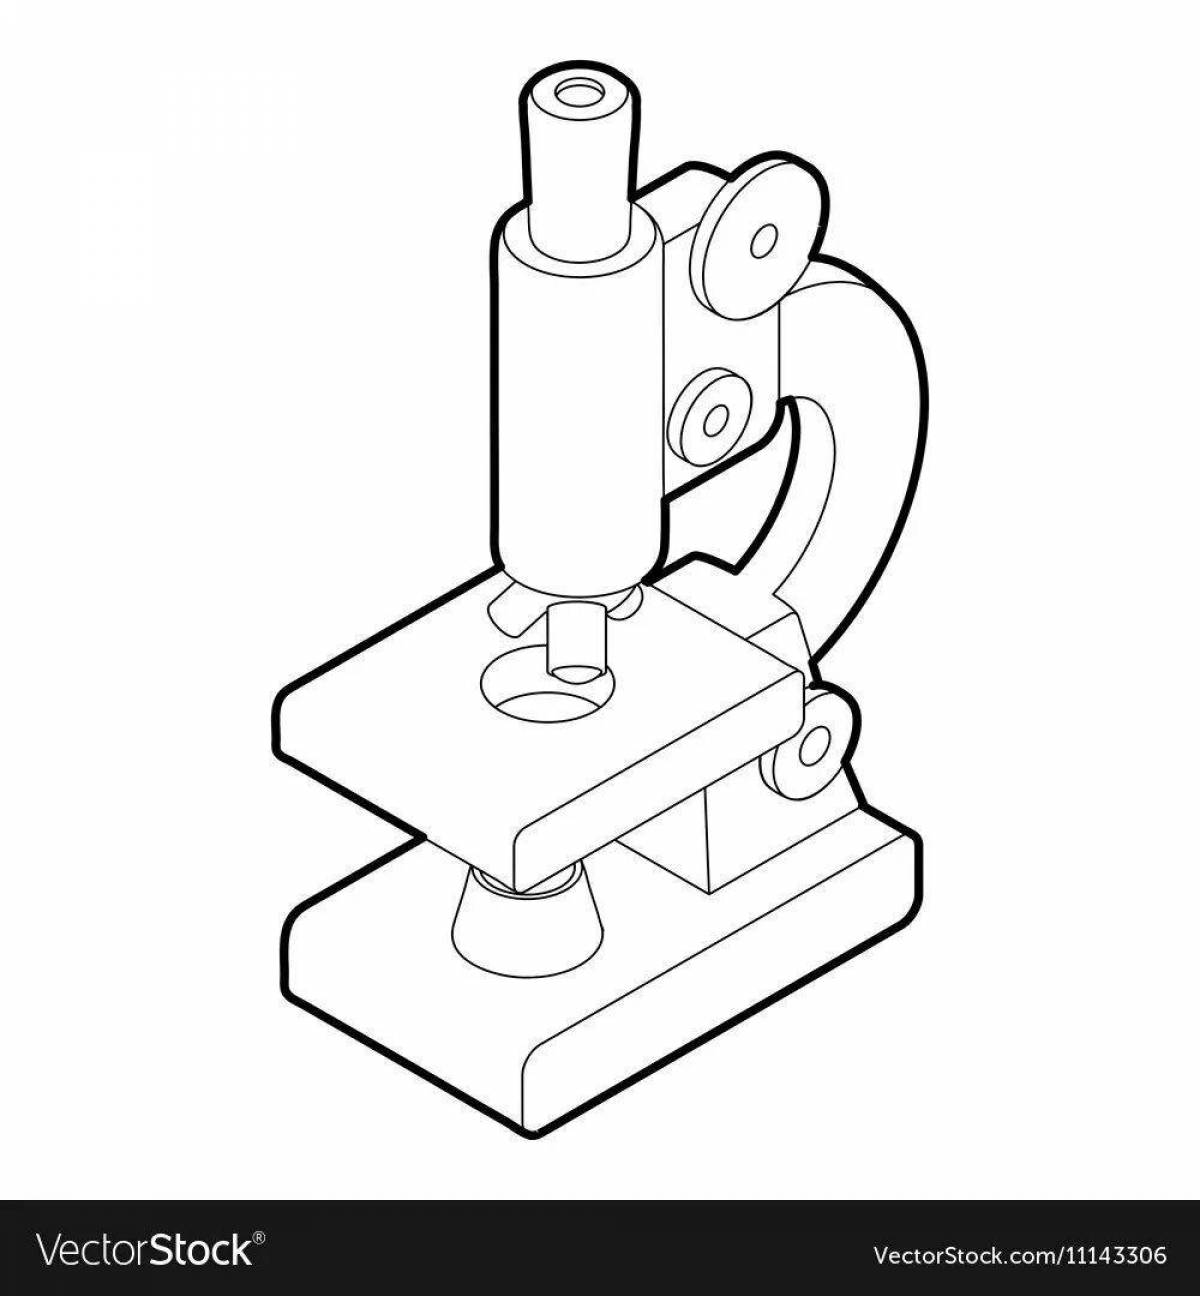 Child microscope #10